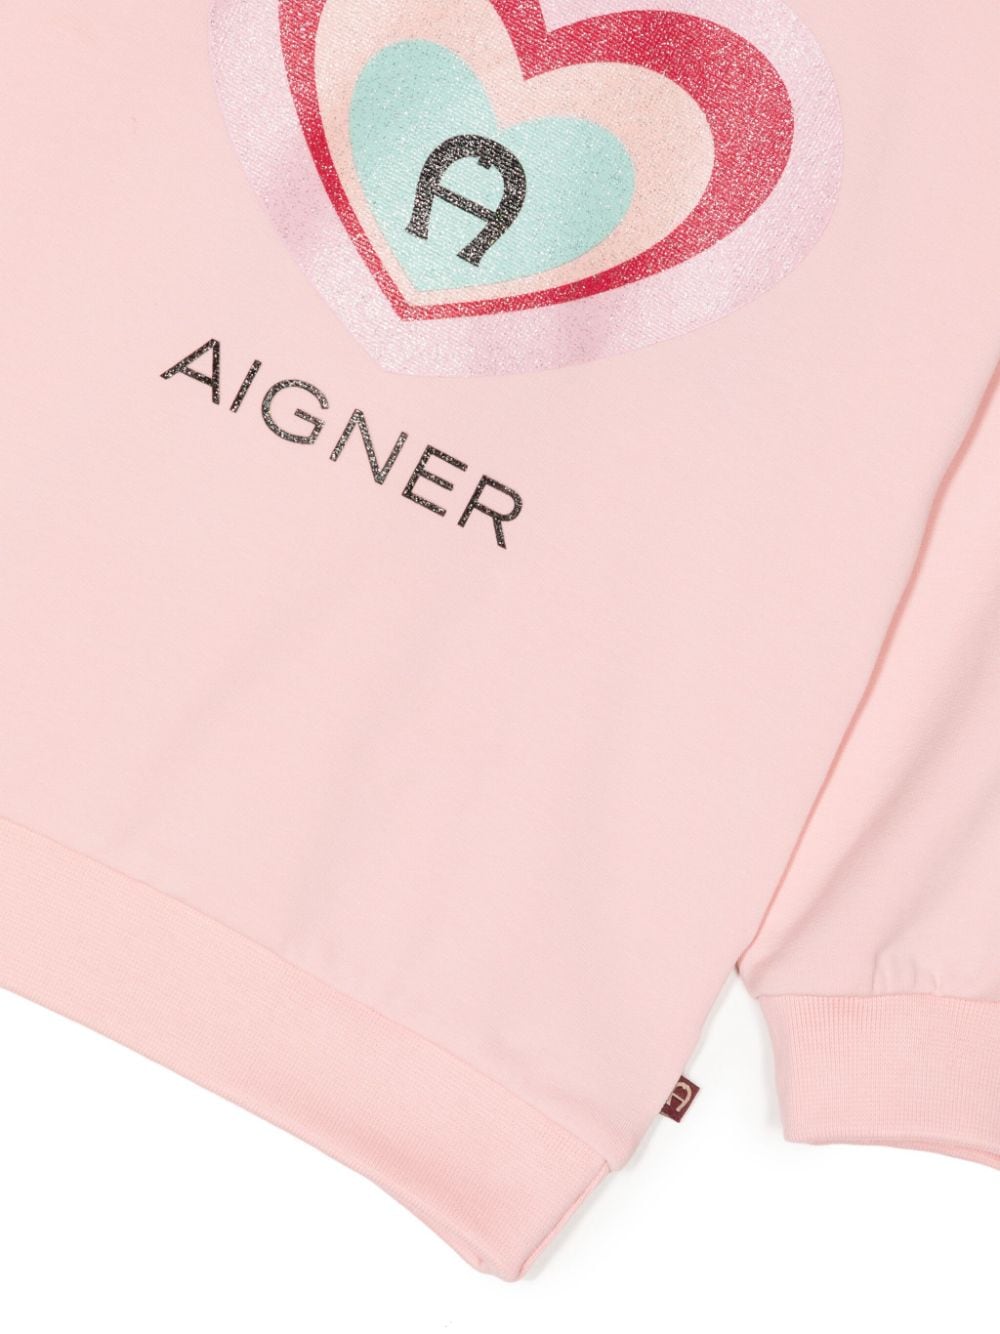 Aigner Kids Sweater met logoprint Roze